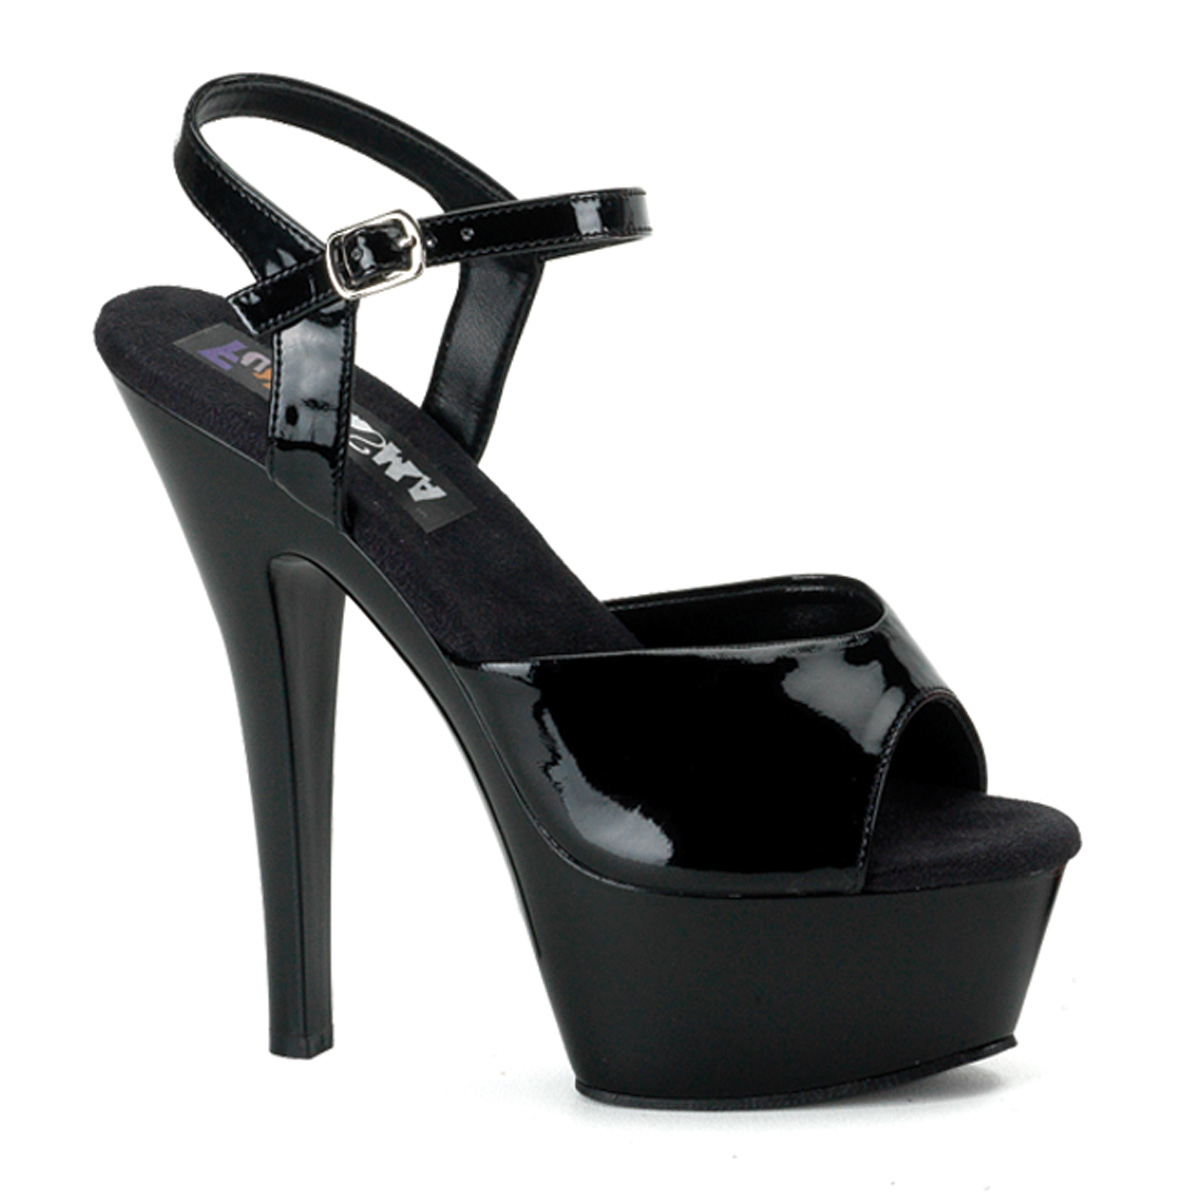 Black 6" stripper platform women's costume shoes